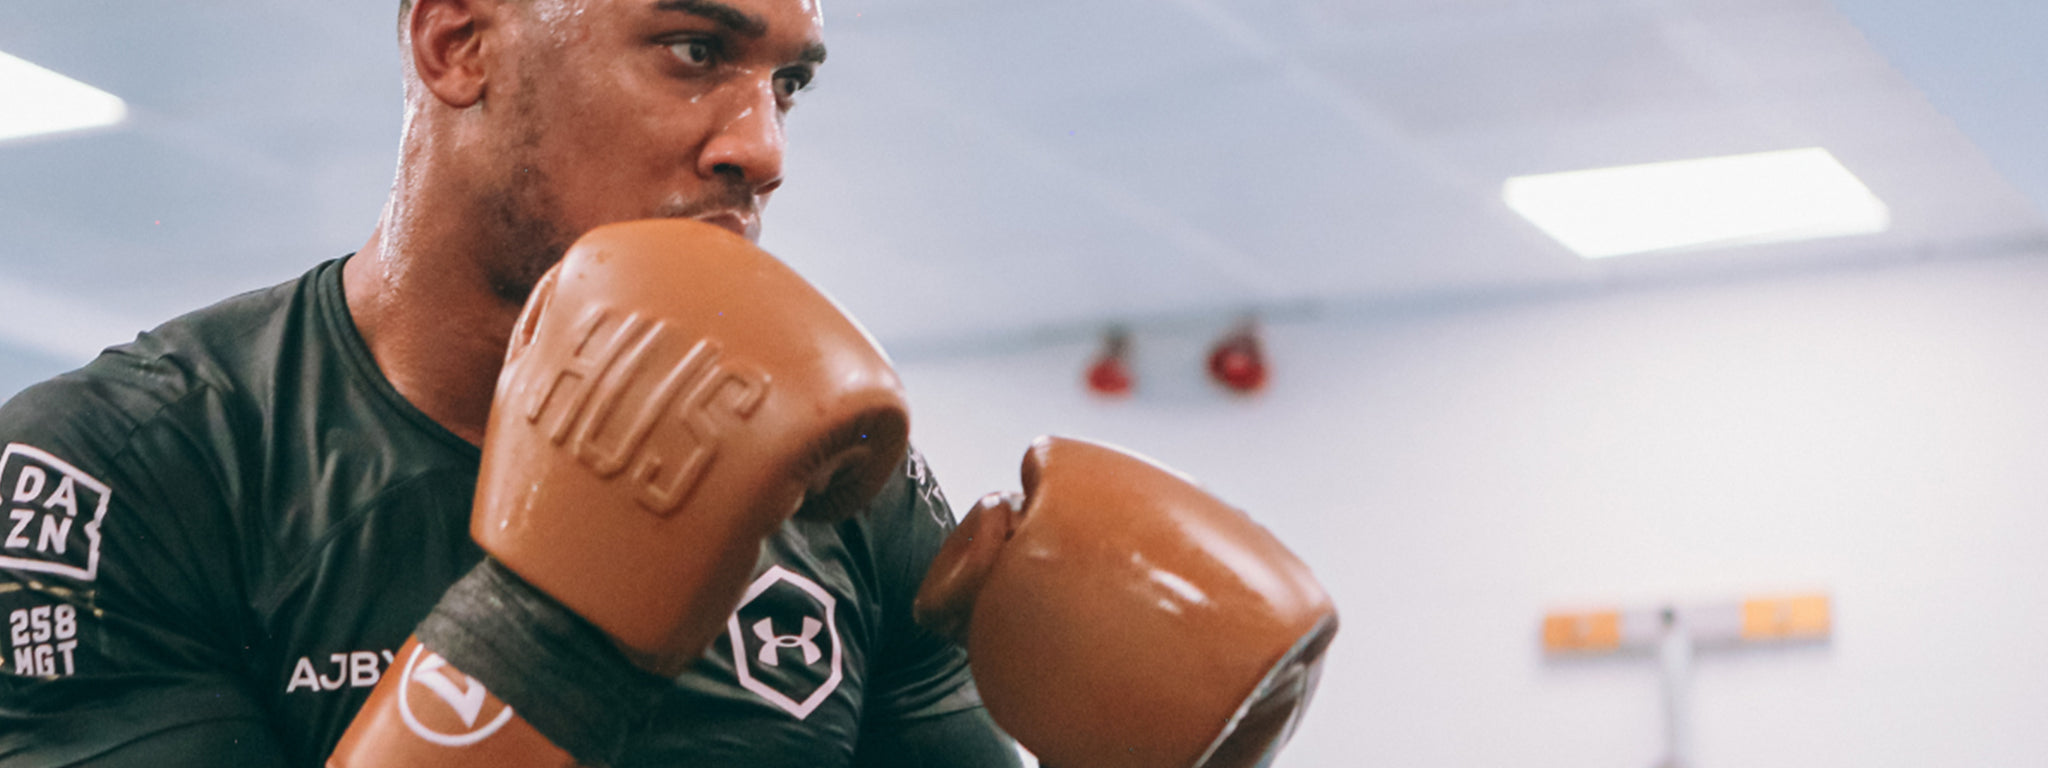 Anthony Joshua Signed Limited Edition Designer Boxing Glove - The